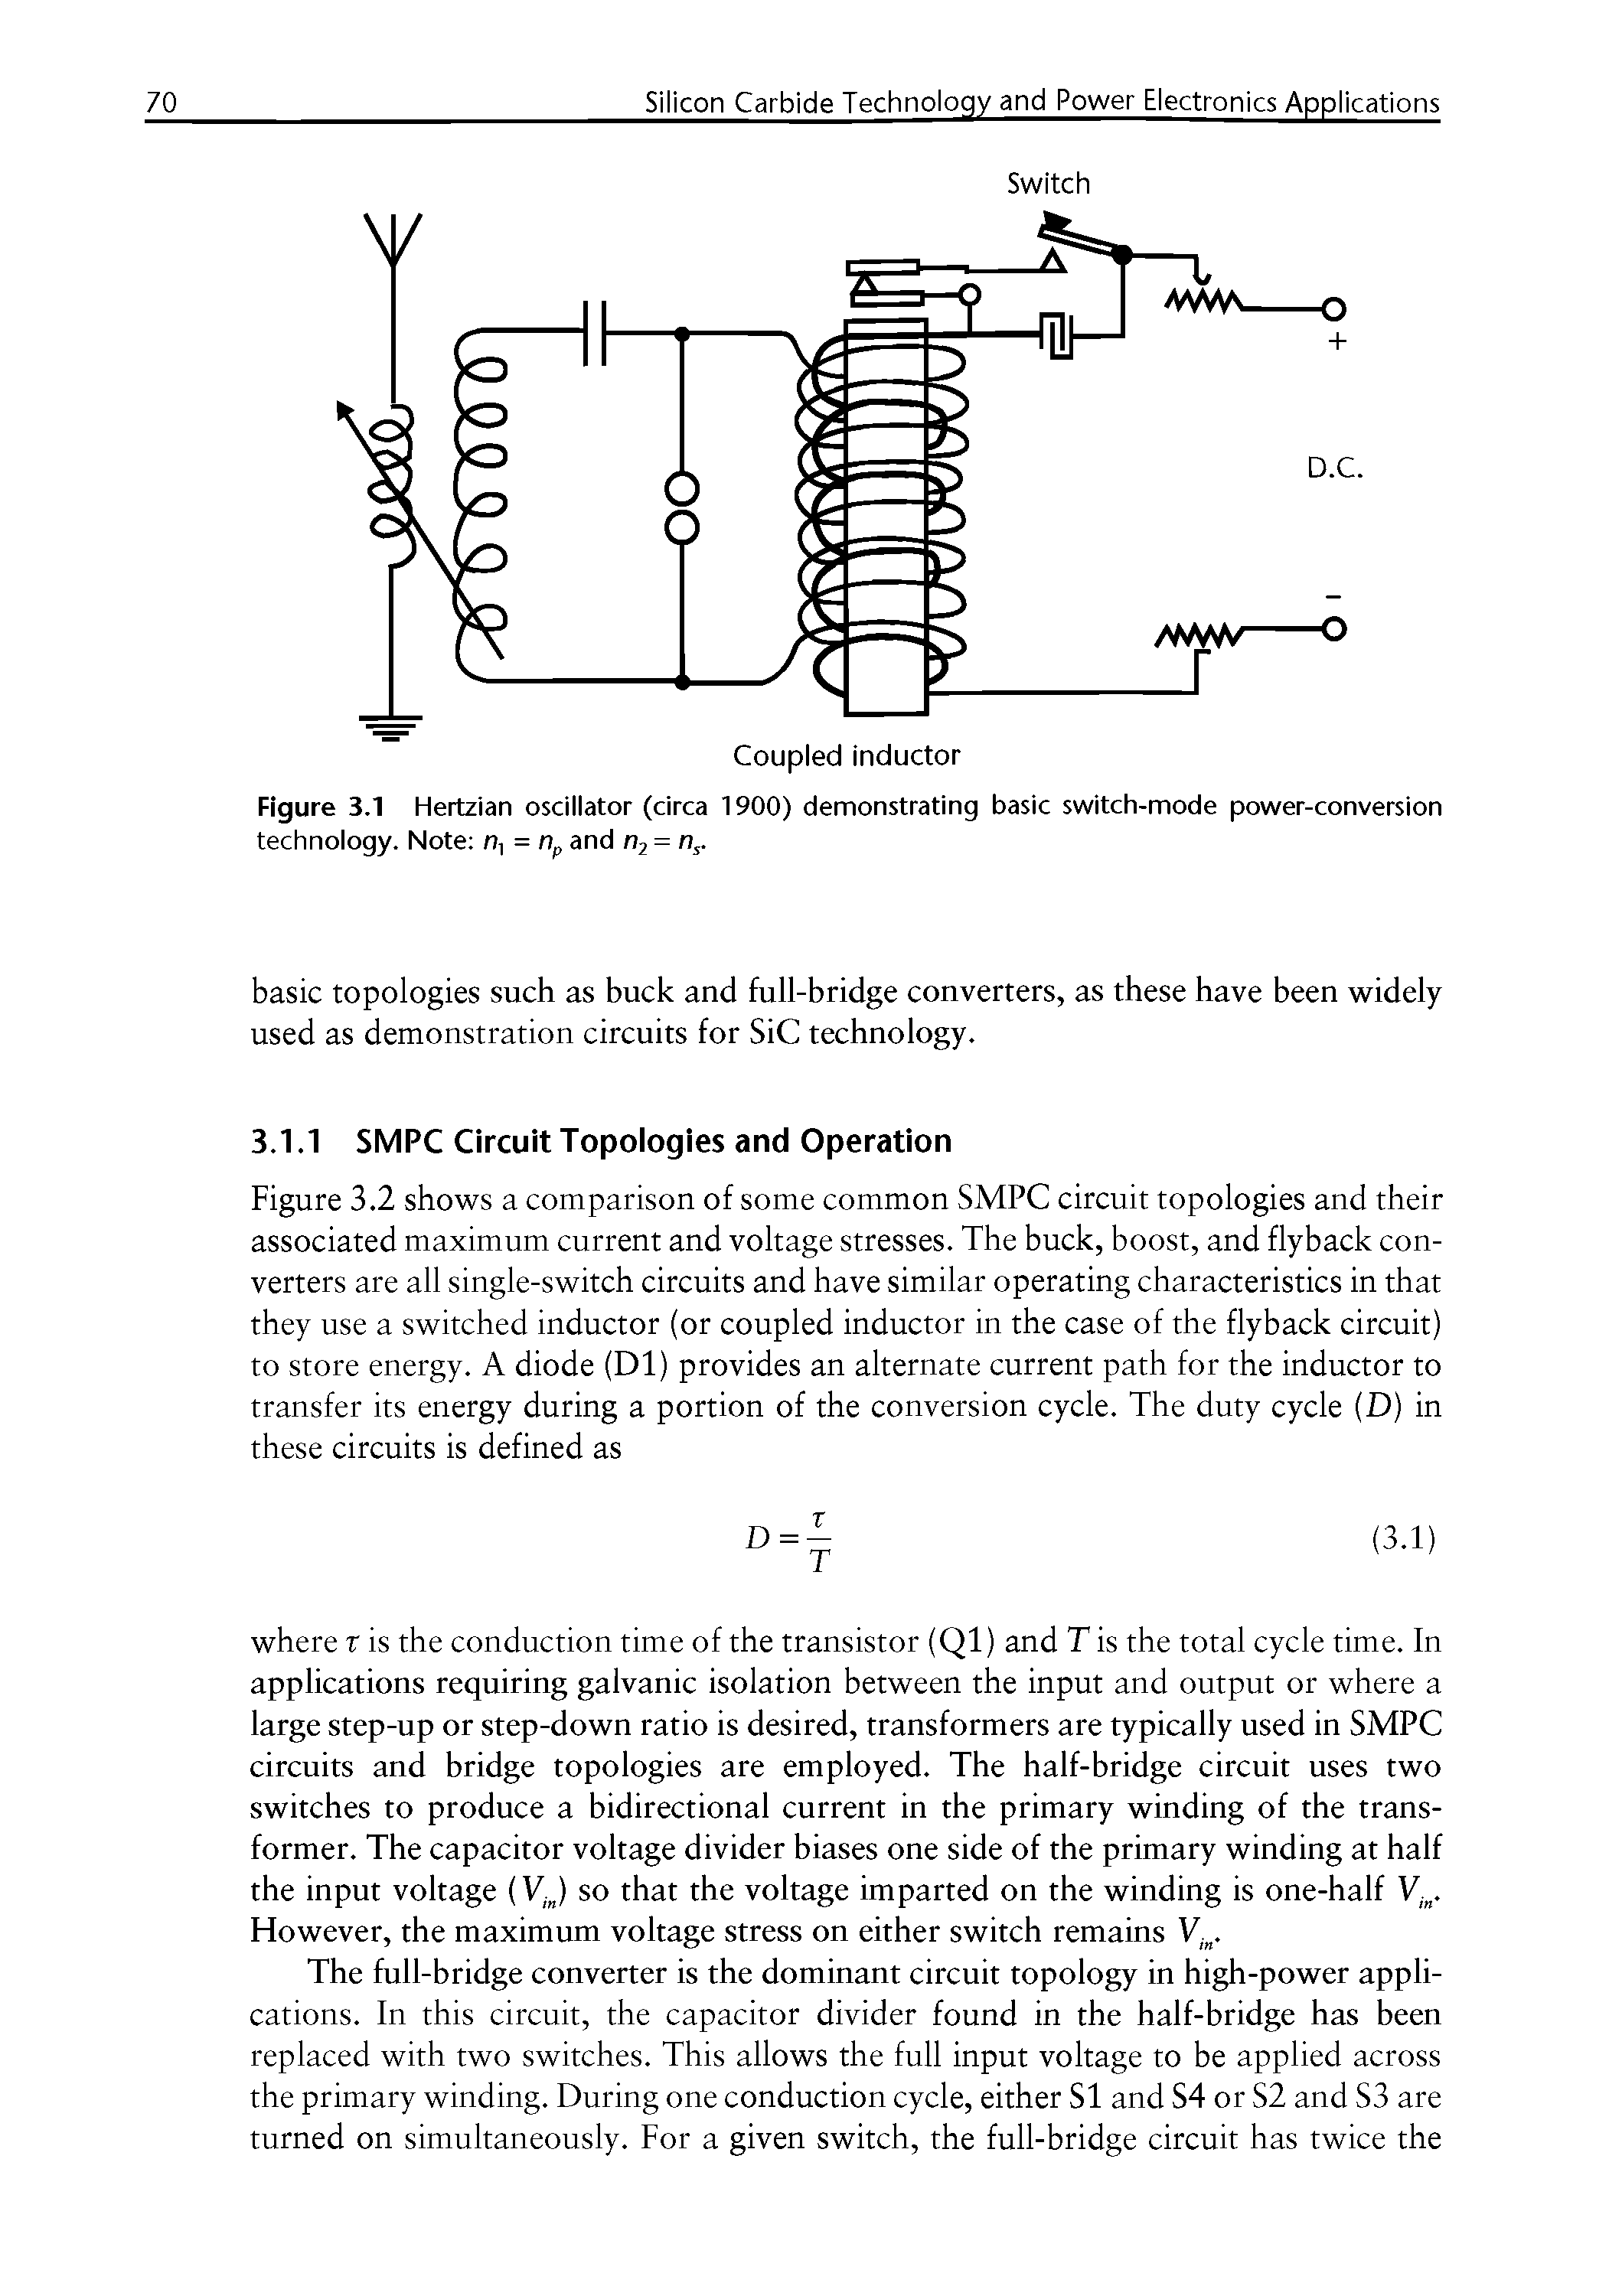 Figure 3.1 Hertzian oscillator (circa 1900) demonstrating basic switch-mode power-conversion technology. Note n, = rip and rij =...